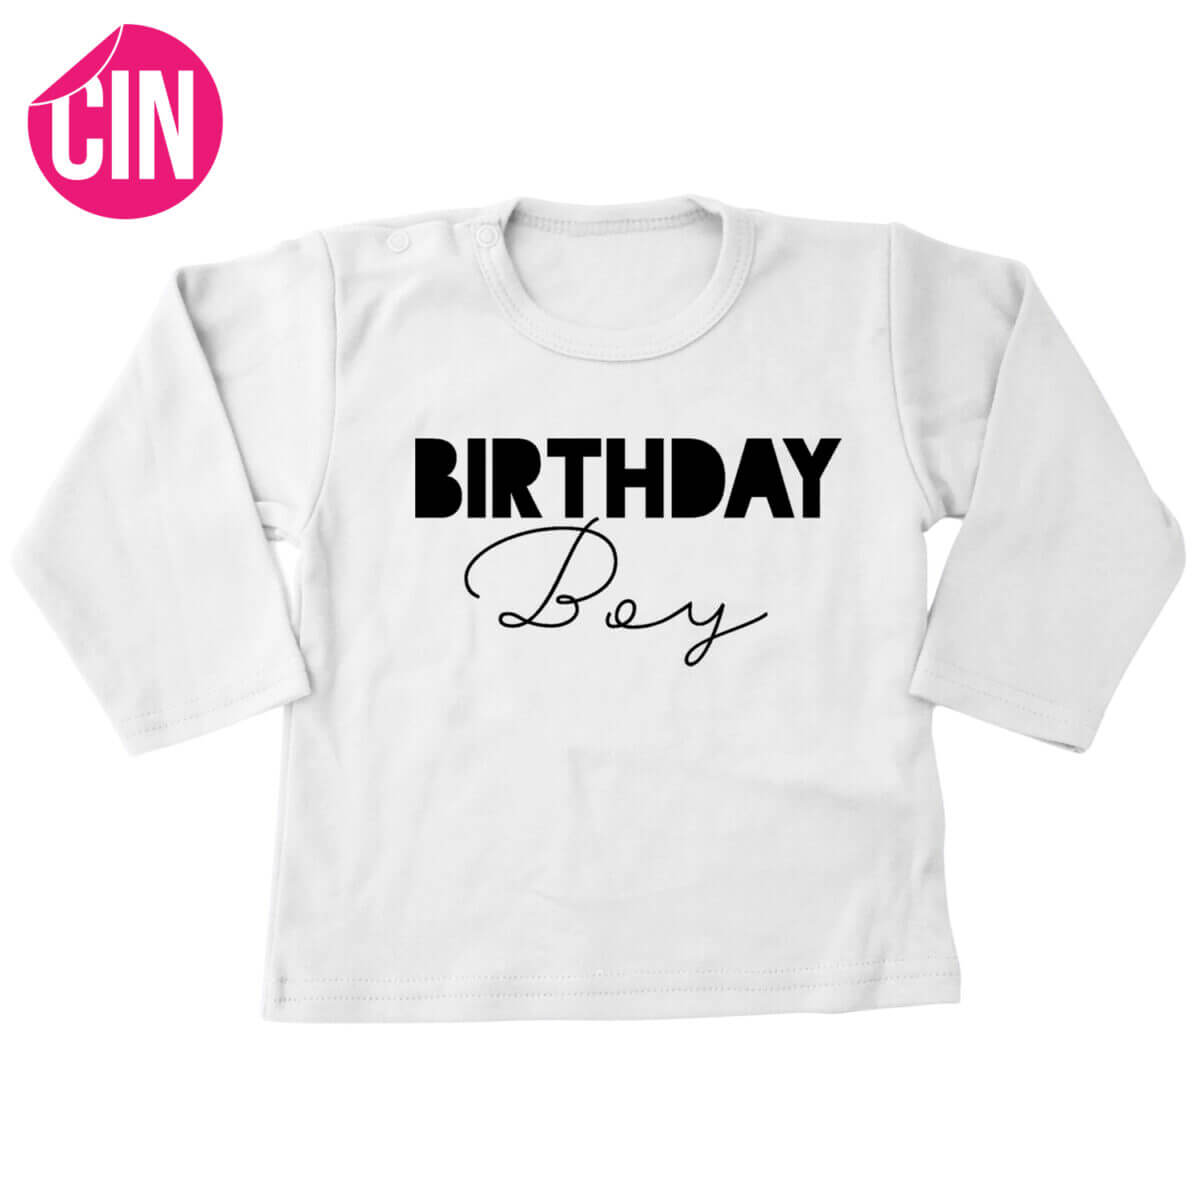 Birthday boy shirt long sleeve cindysigns